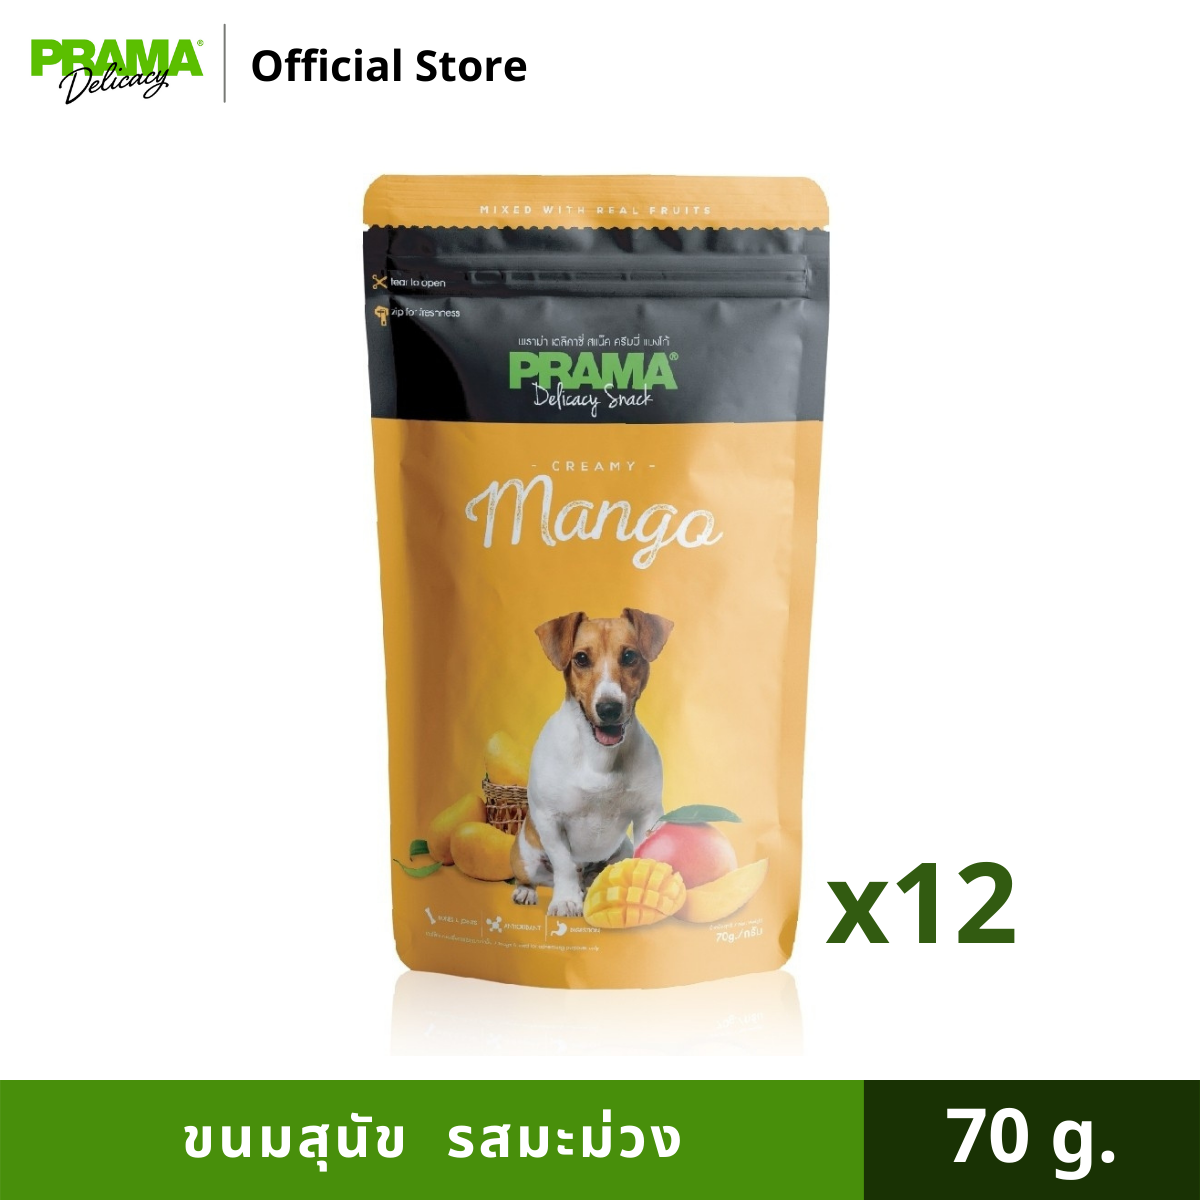 PRAMA Delicacy พราม่า เดลิคาซี่ รสมะม่วง ขนมสุนัข ขนาด 70 กรัม - 12 ซอง / Box